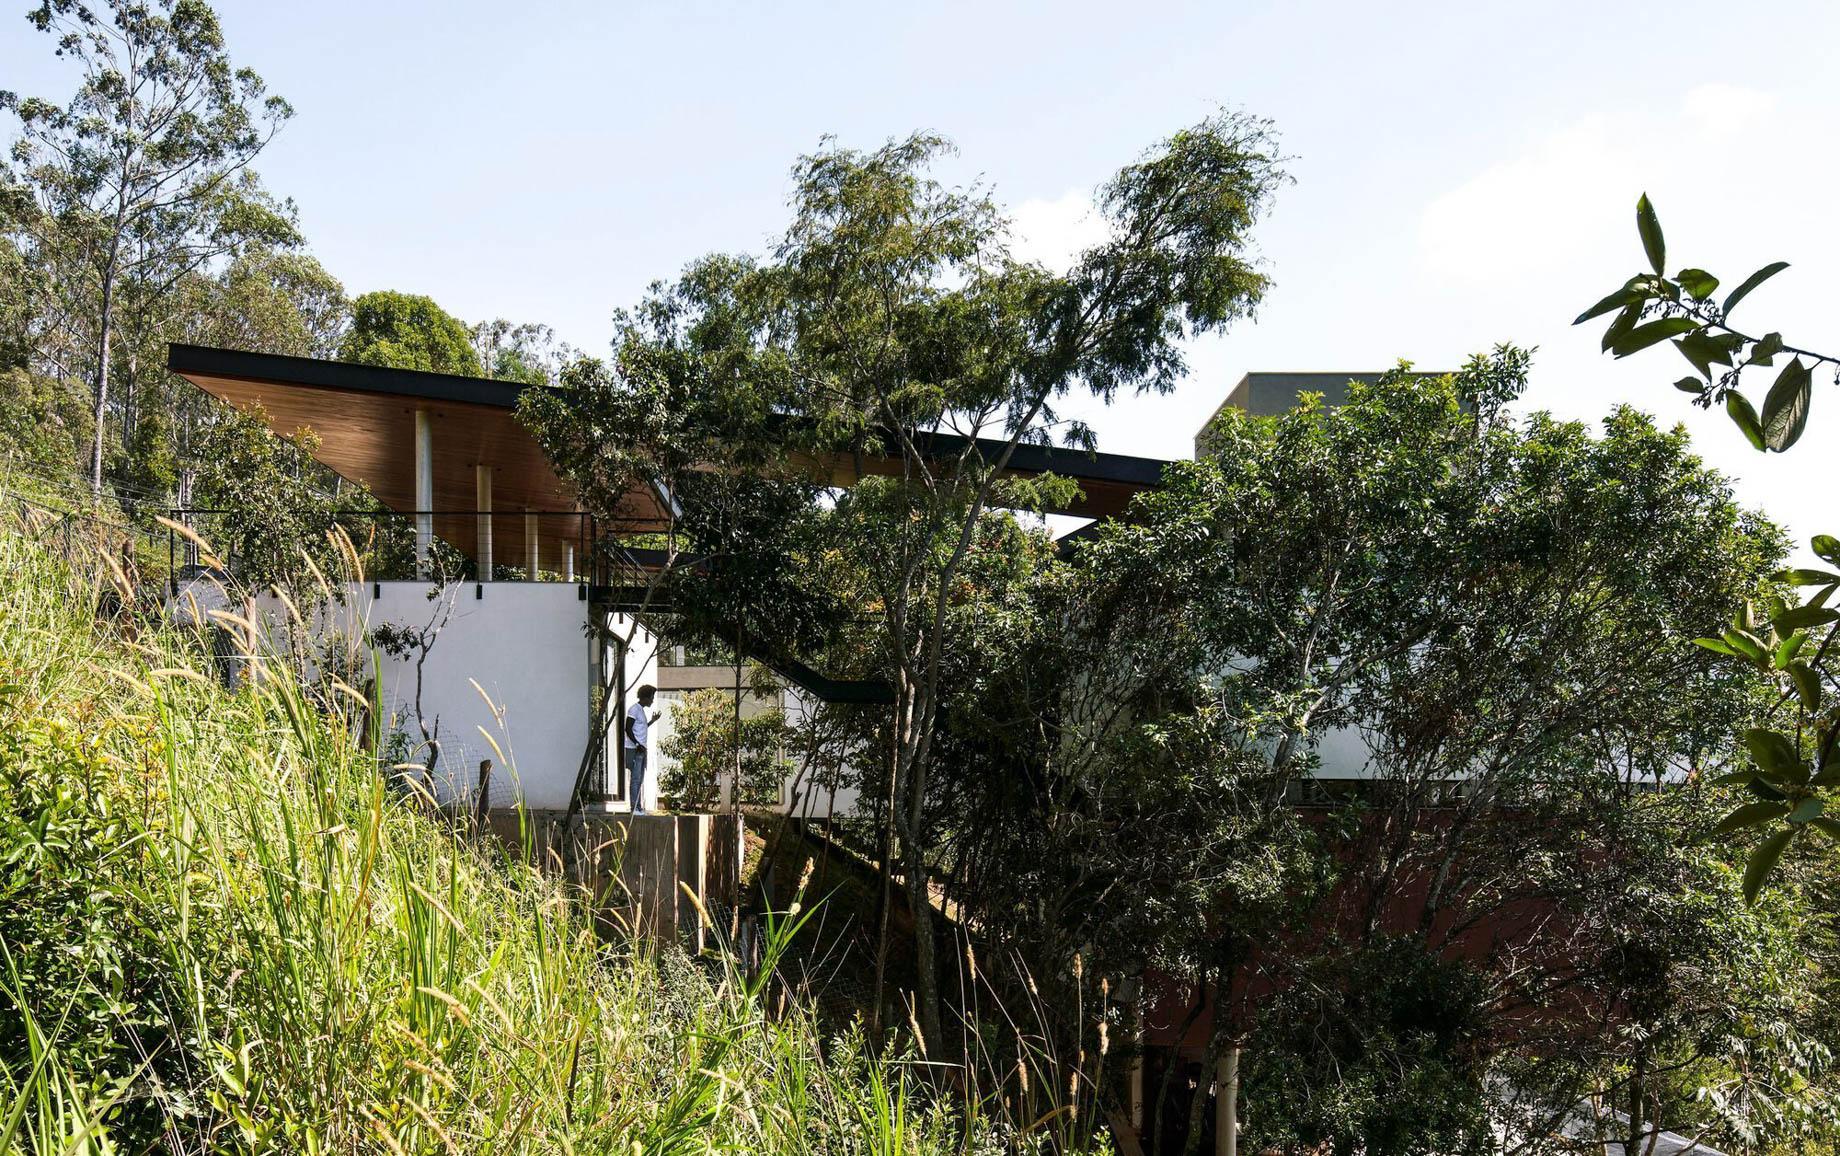 Bosque House in the Woods – Nova Lima, Brazil